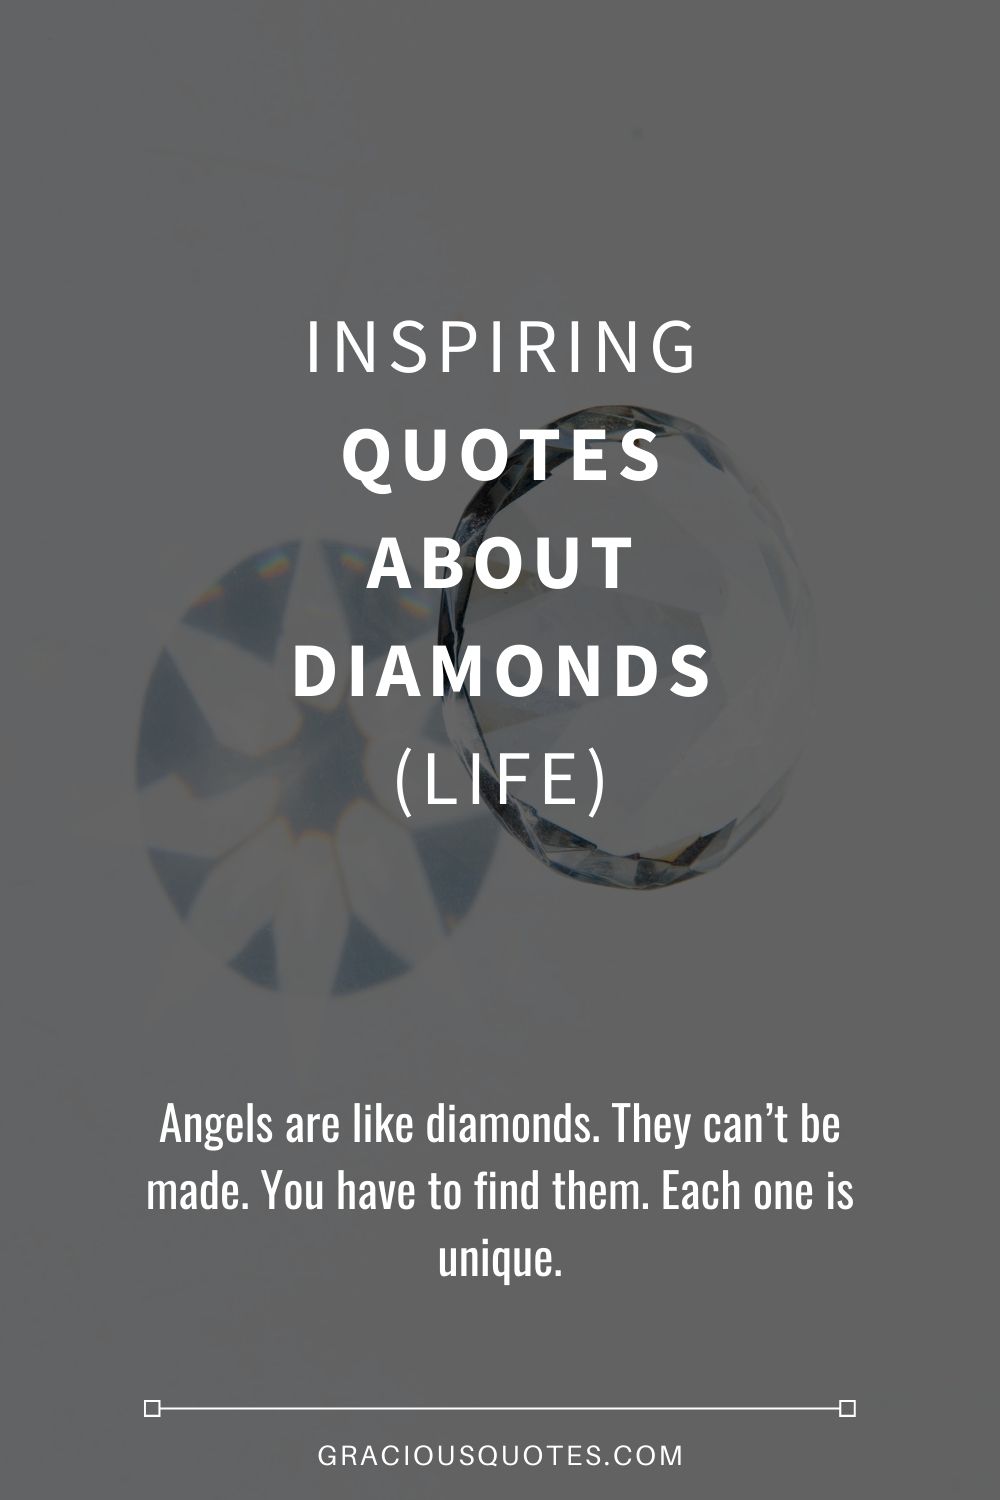 Inspiring Quotes About Diamonds (LIFE) - Gracious Quotes